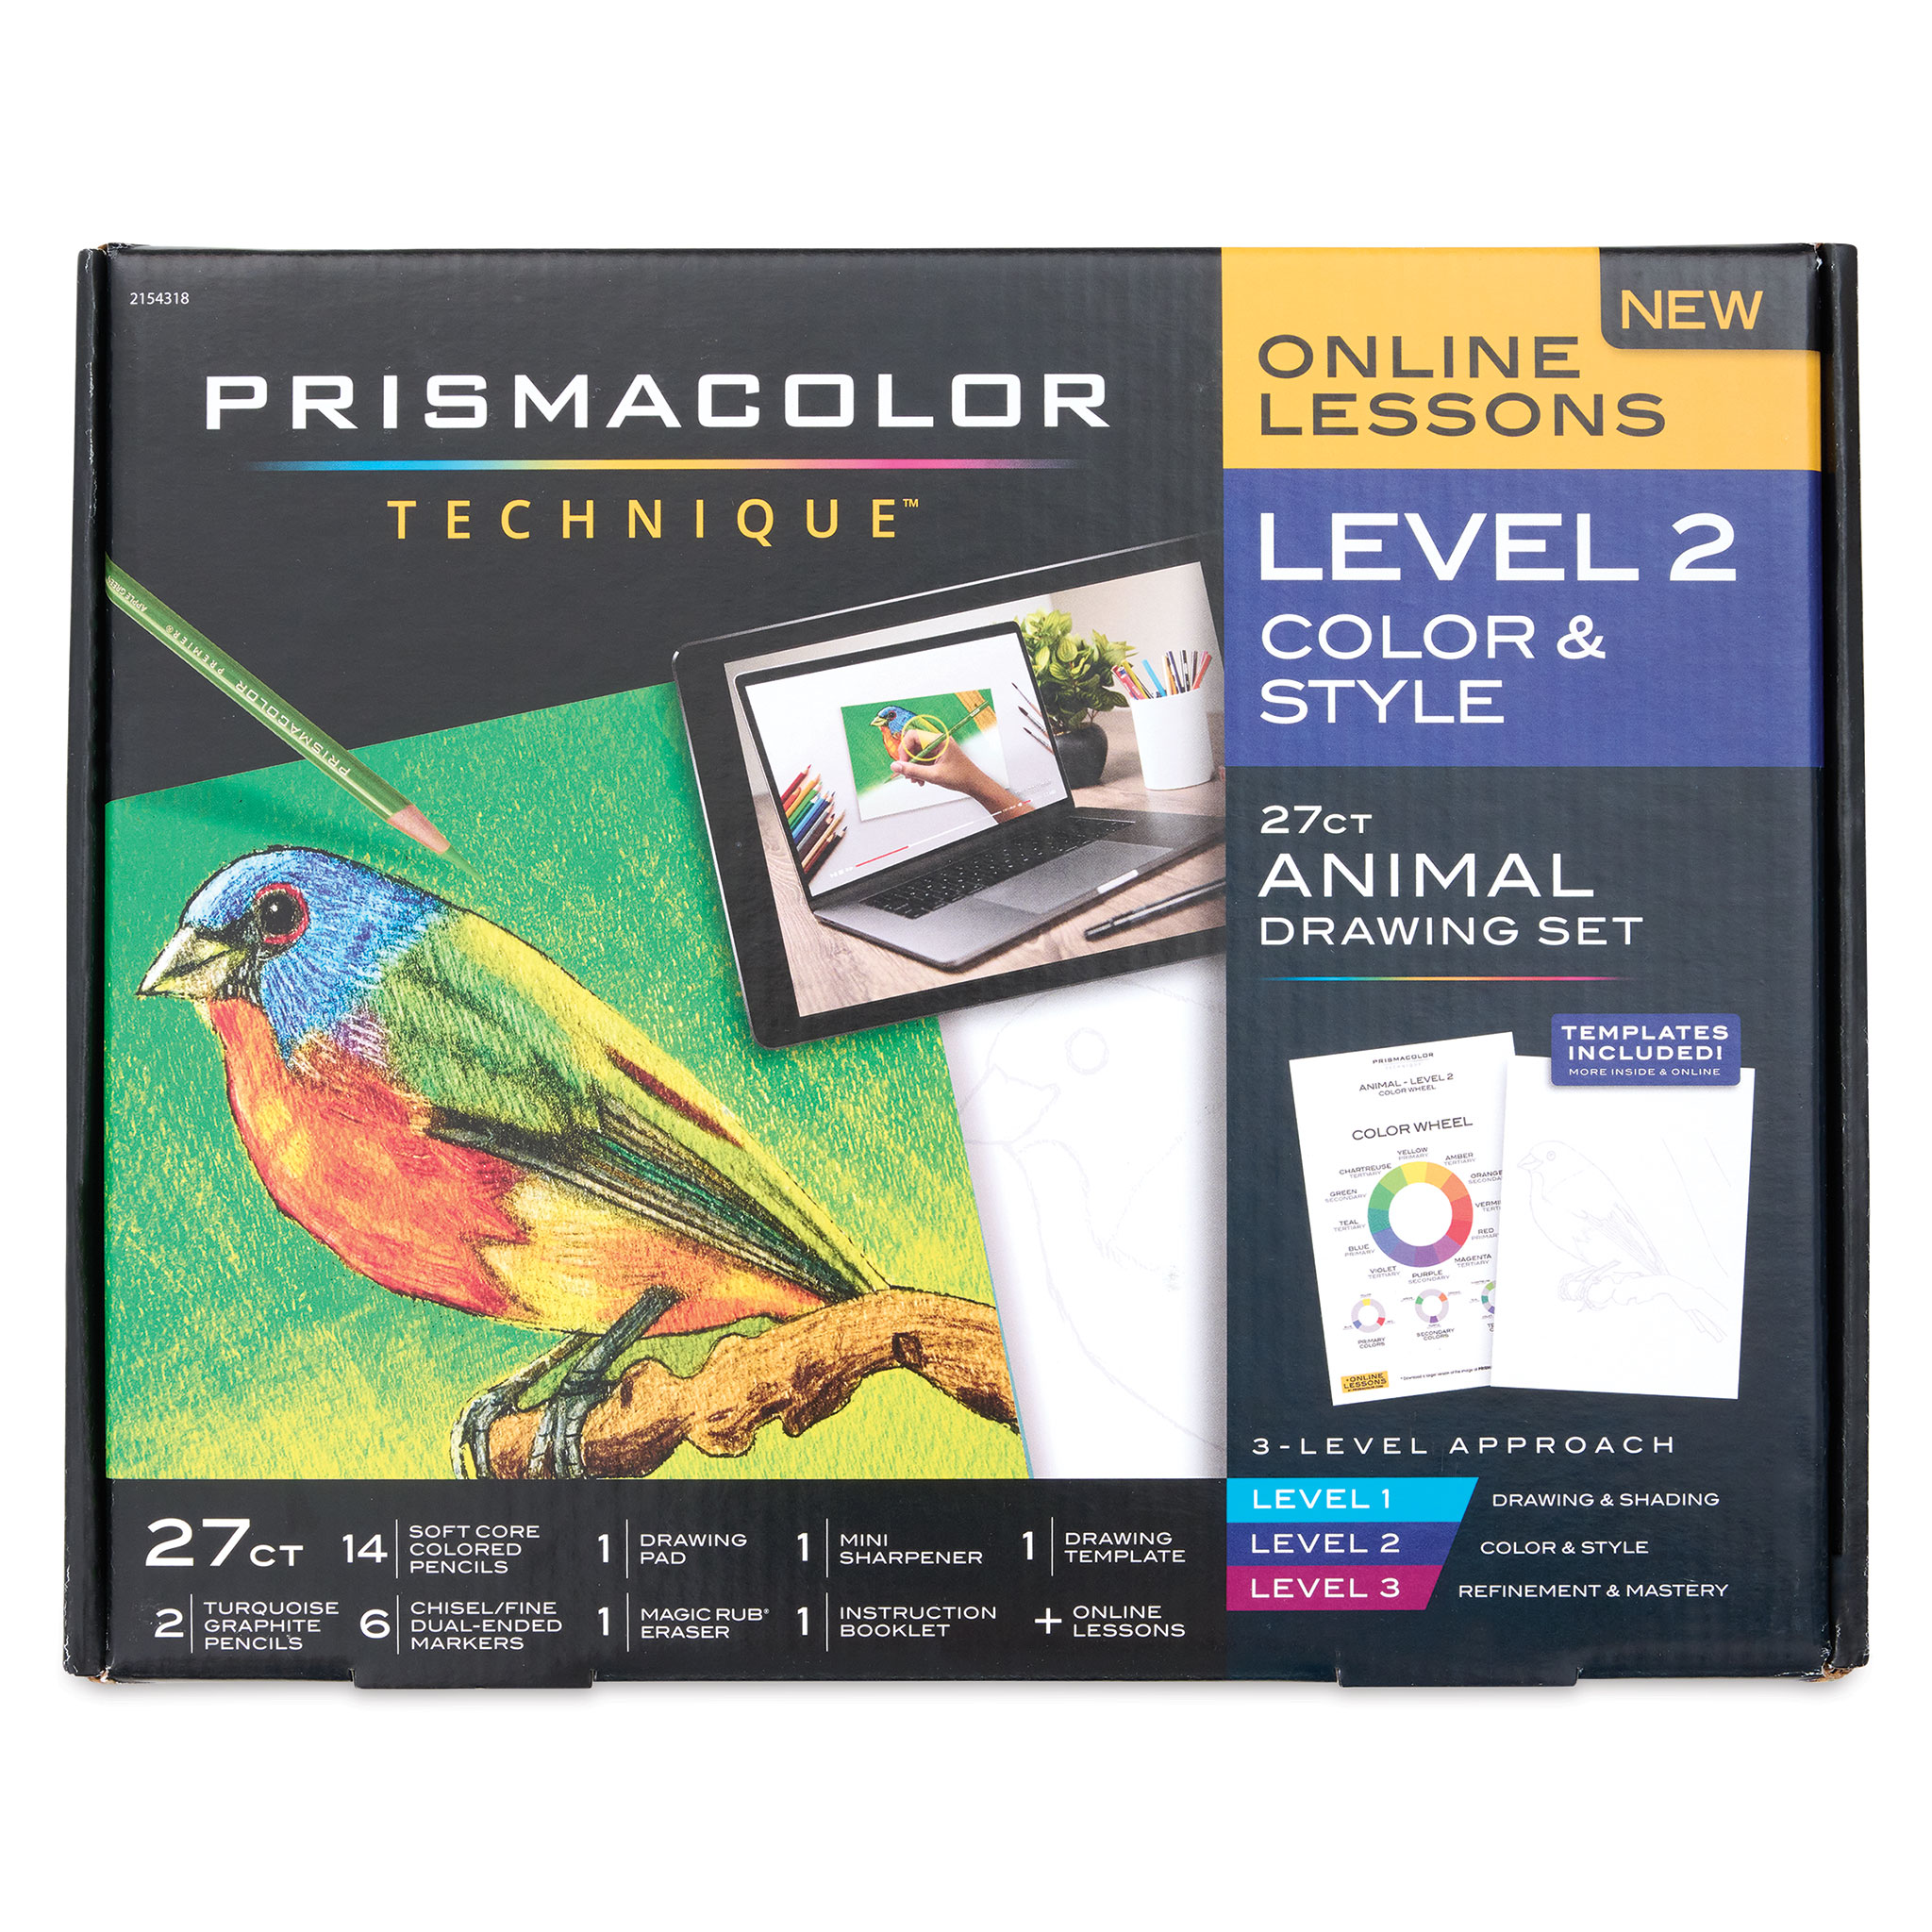 Prismacolor Technique 28ct Animal Drawing Set Level 3 Refinement & Mastery